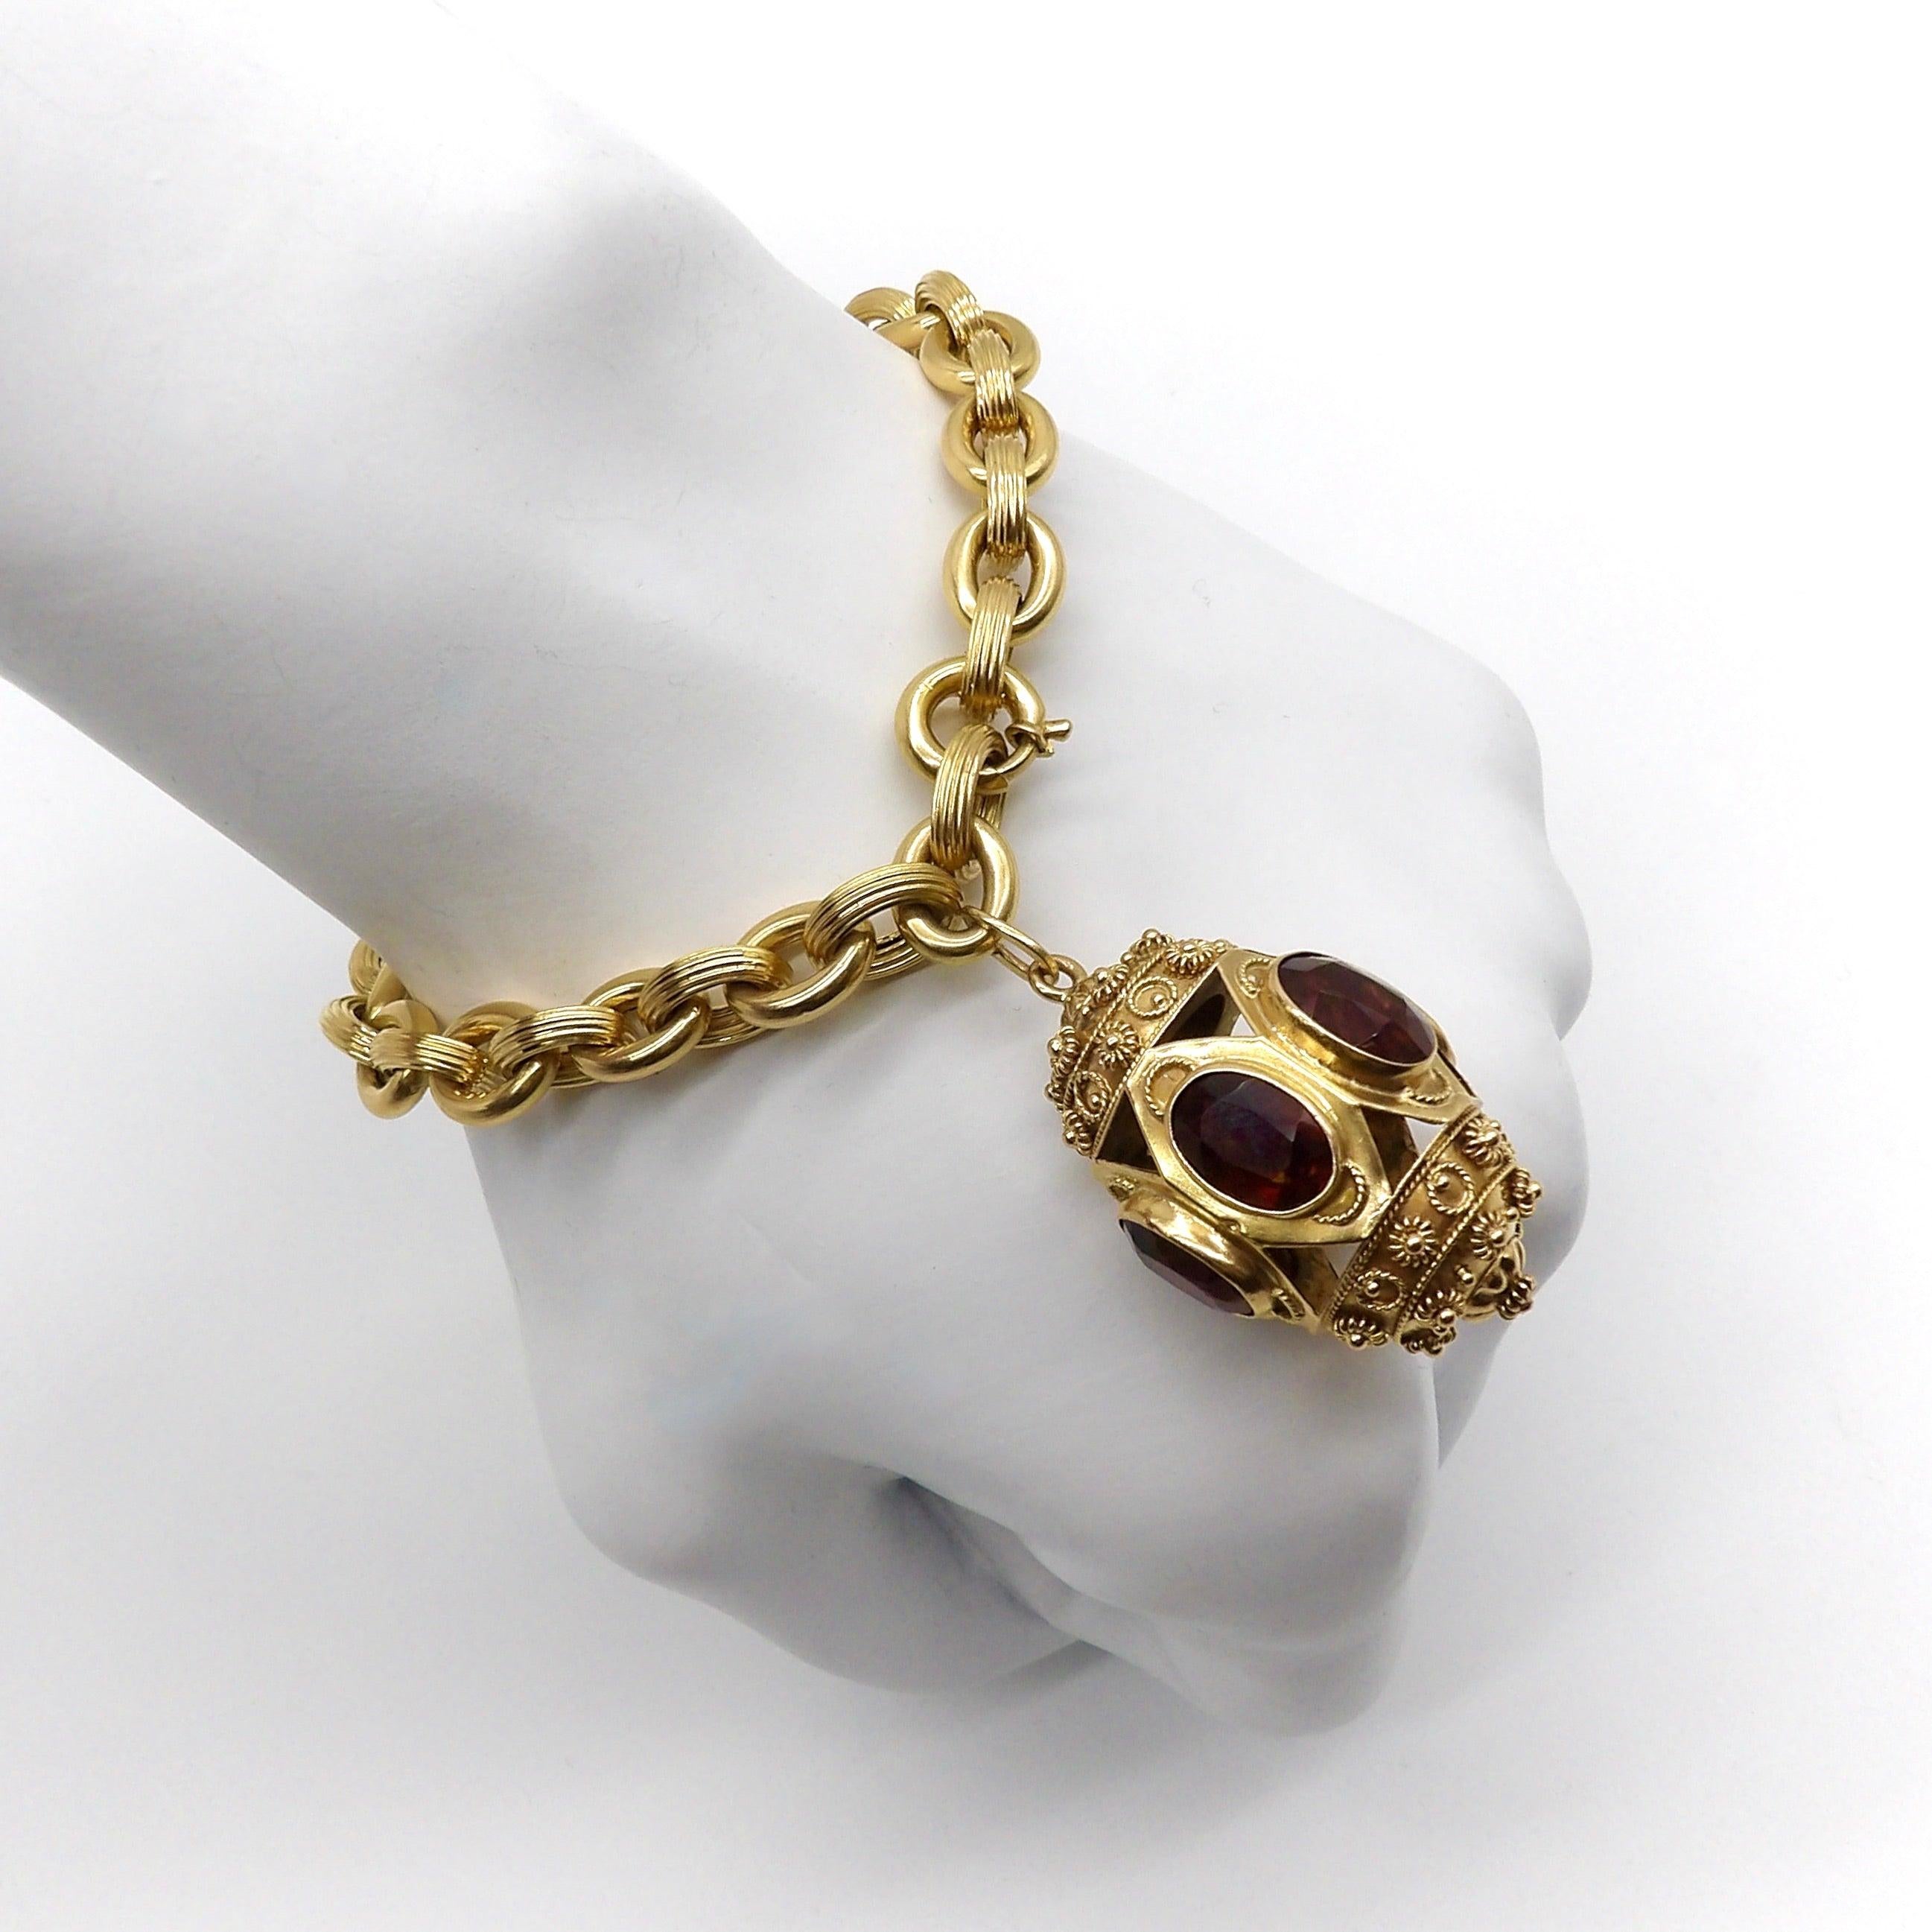 Oval Cut 18K Gold Vintage Italian Bracelet with Lantern Charm, circa 1970’s-1980’s